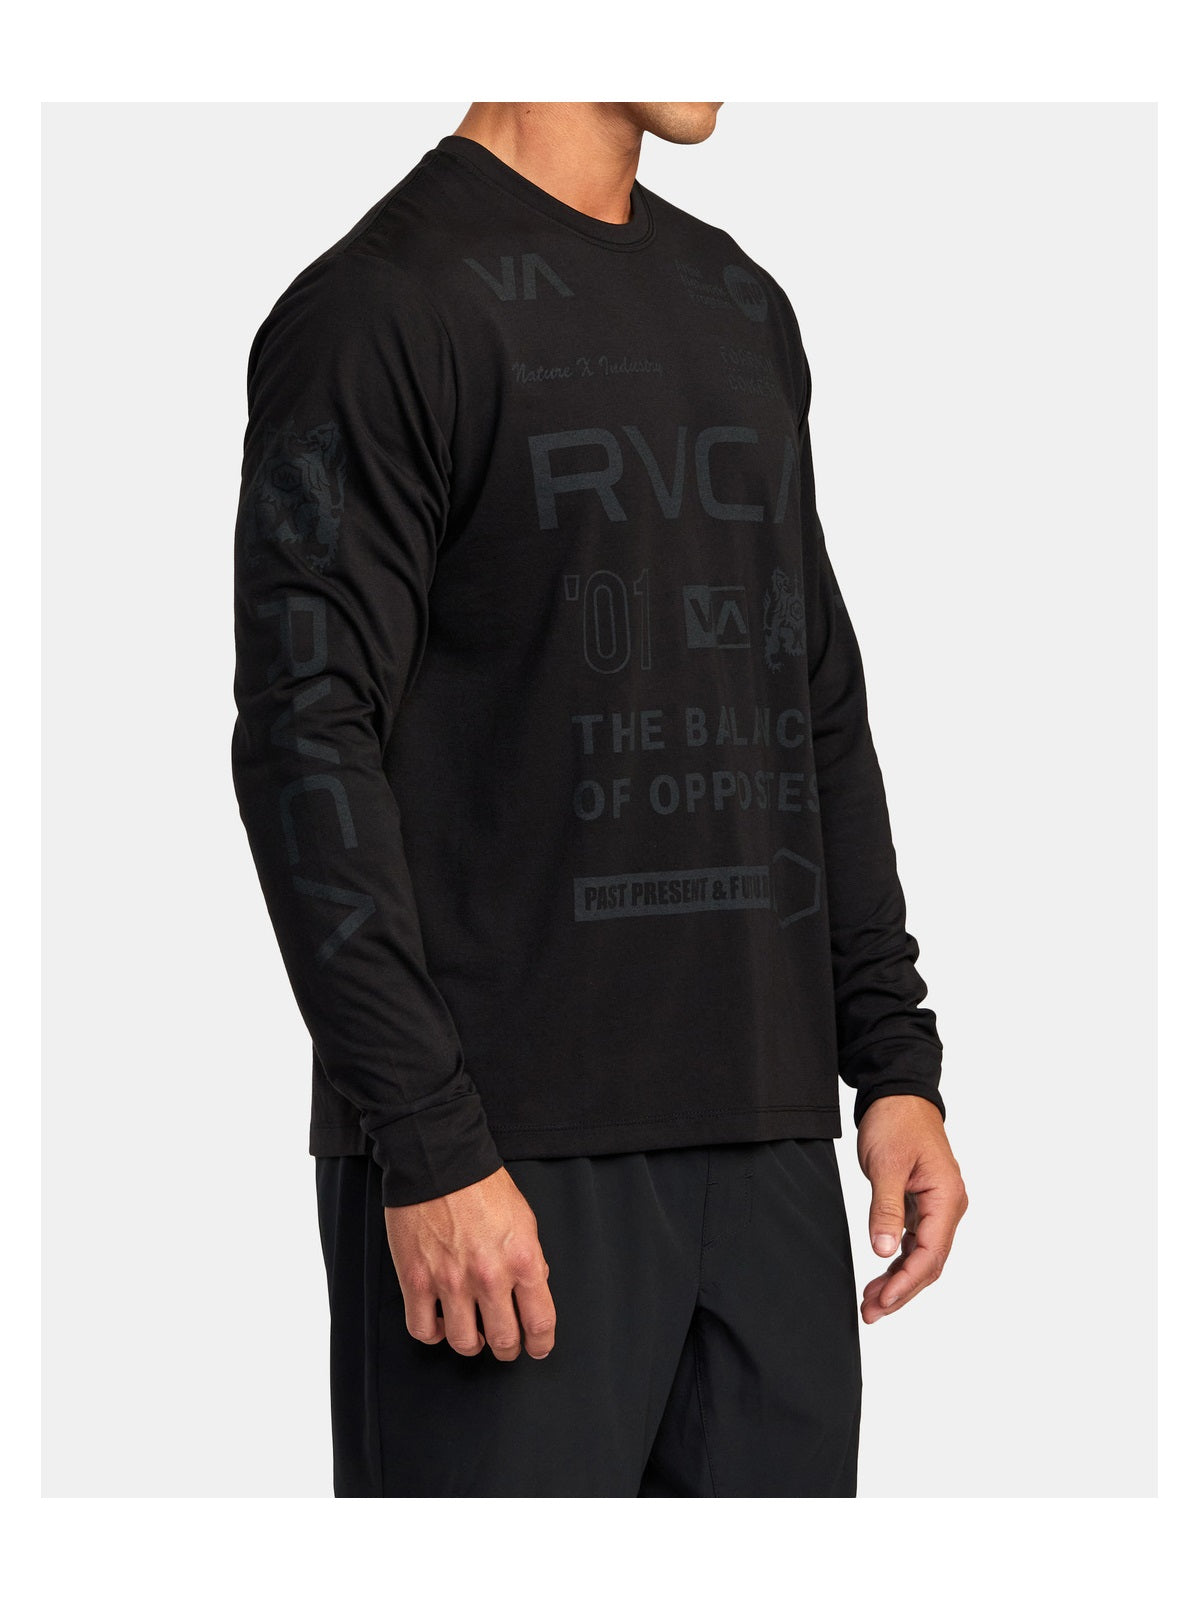 Koszulka RVCA All Brand Ls czarny